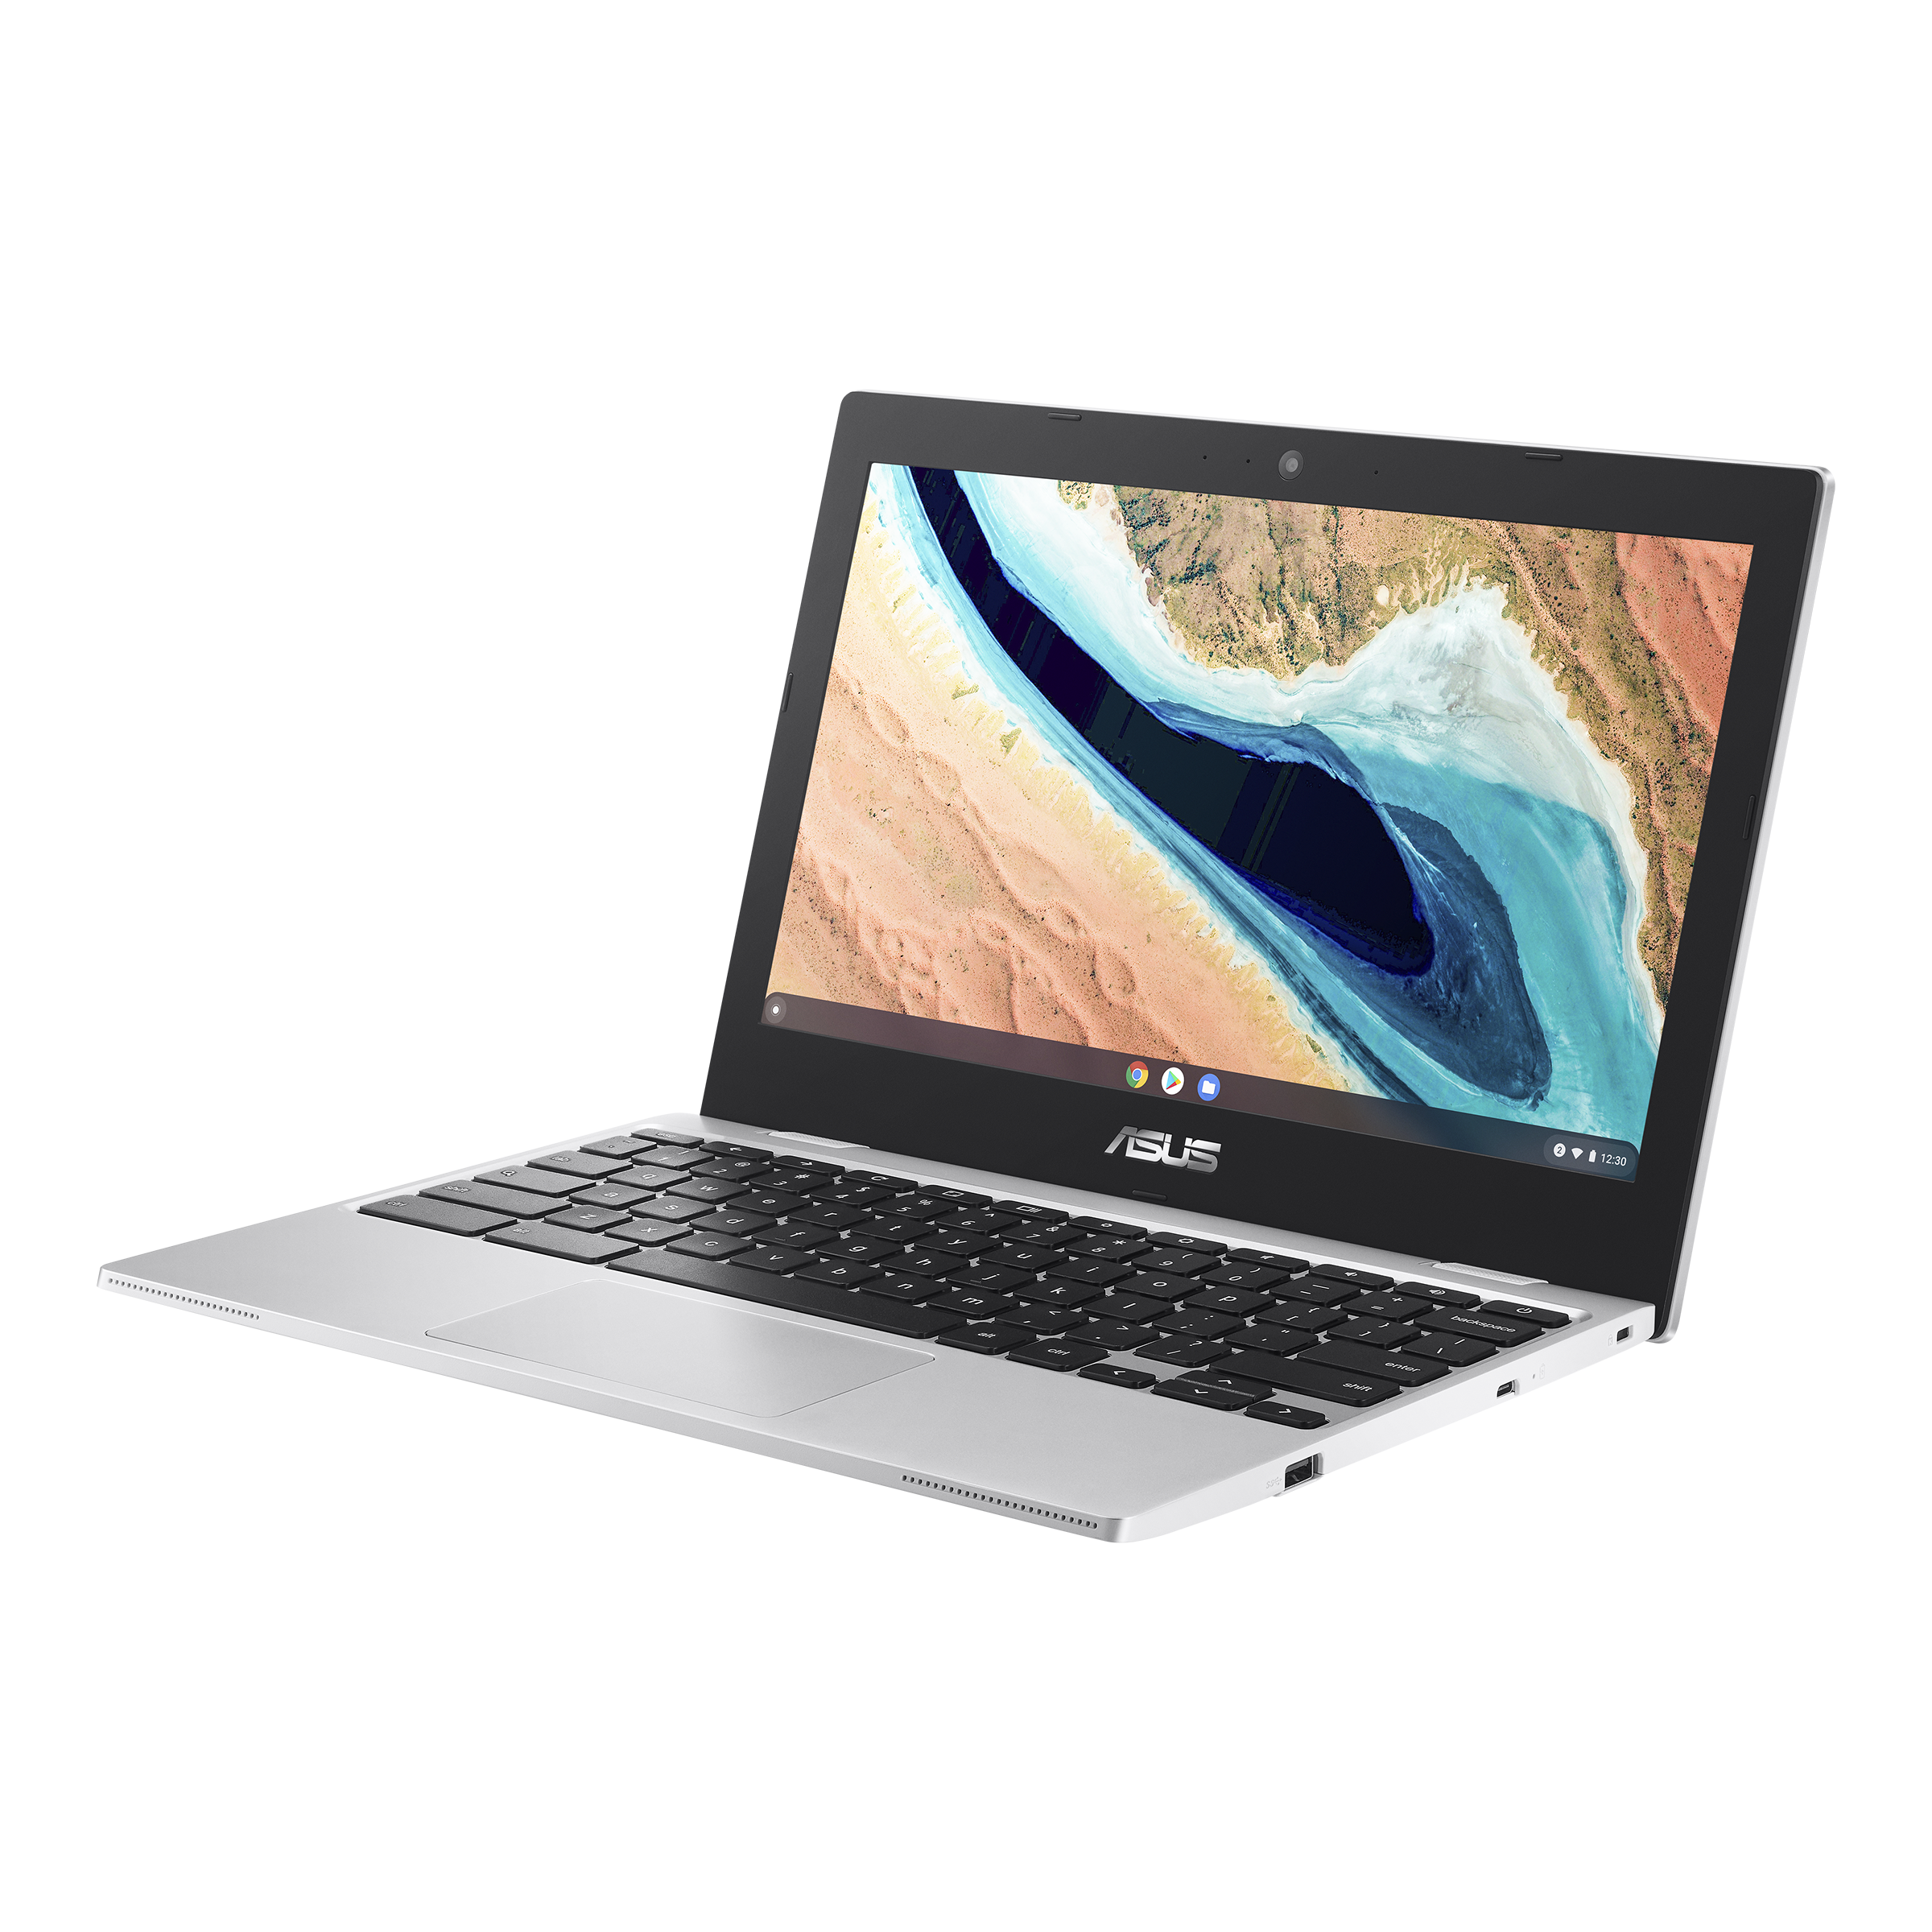 ASUS  Chromebook CX1(CX1102) ノートパソコン